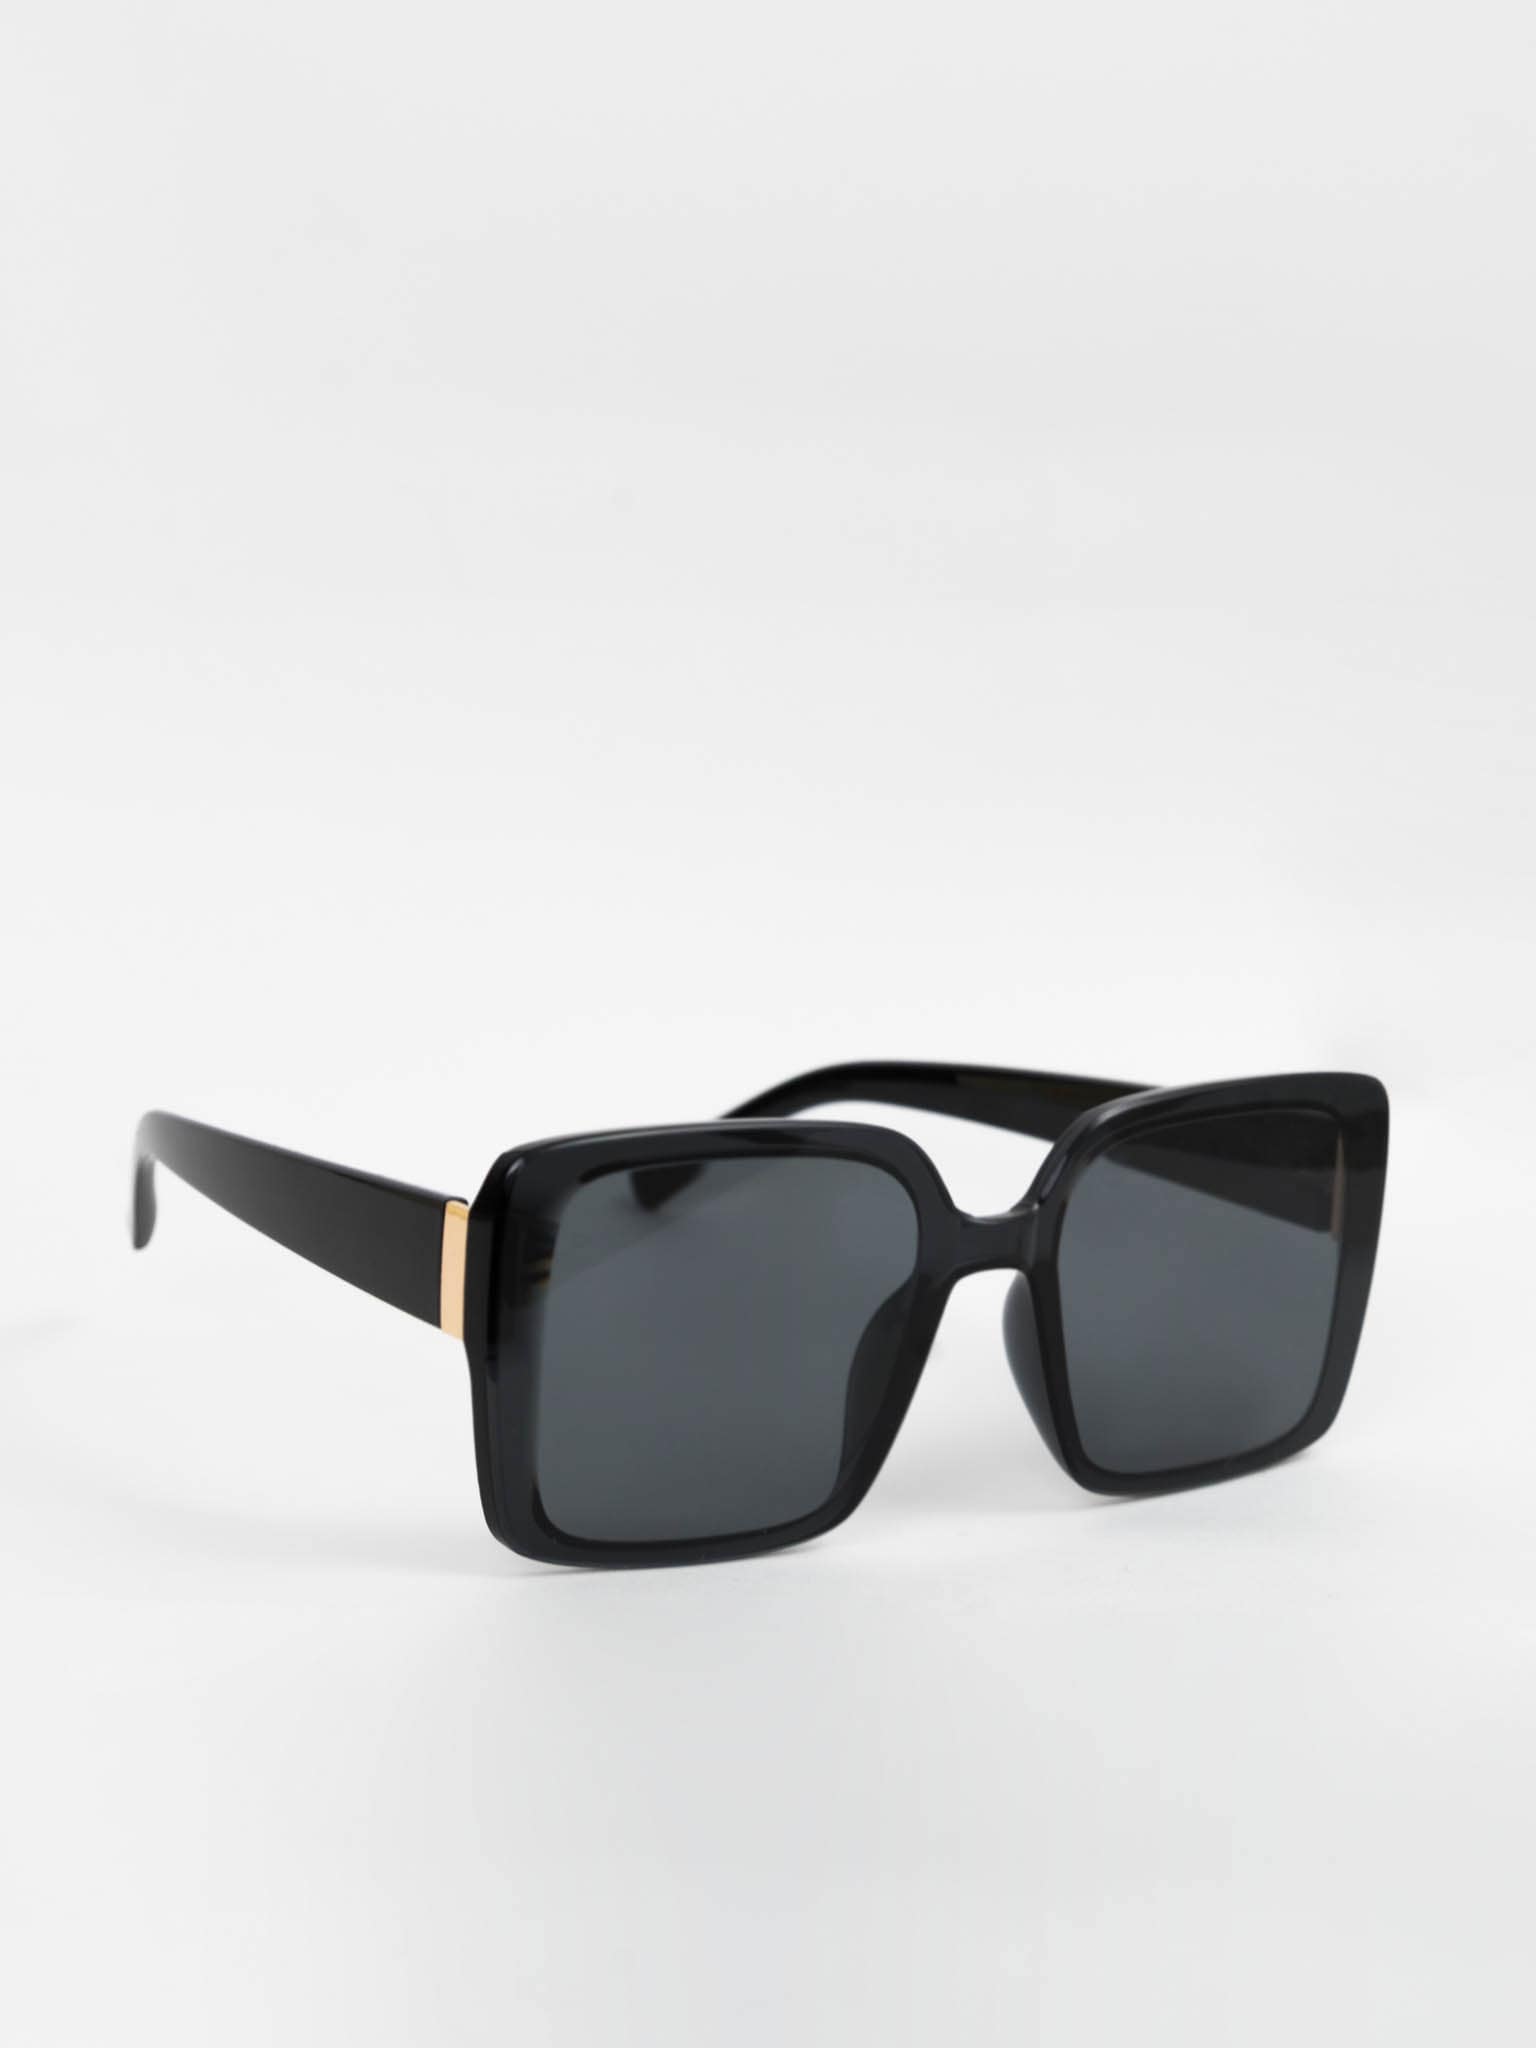 Oversized square-shaped sunglasses